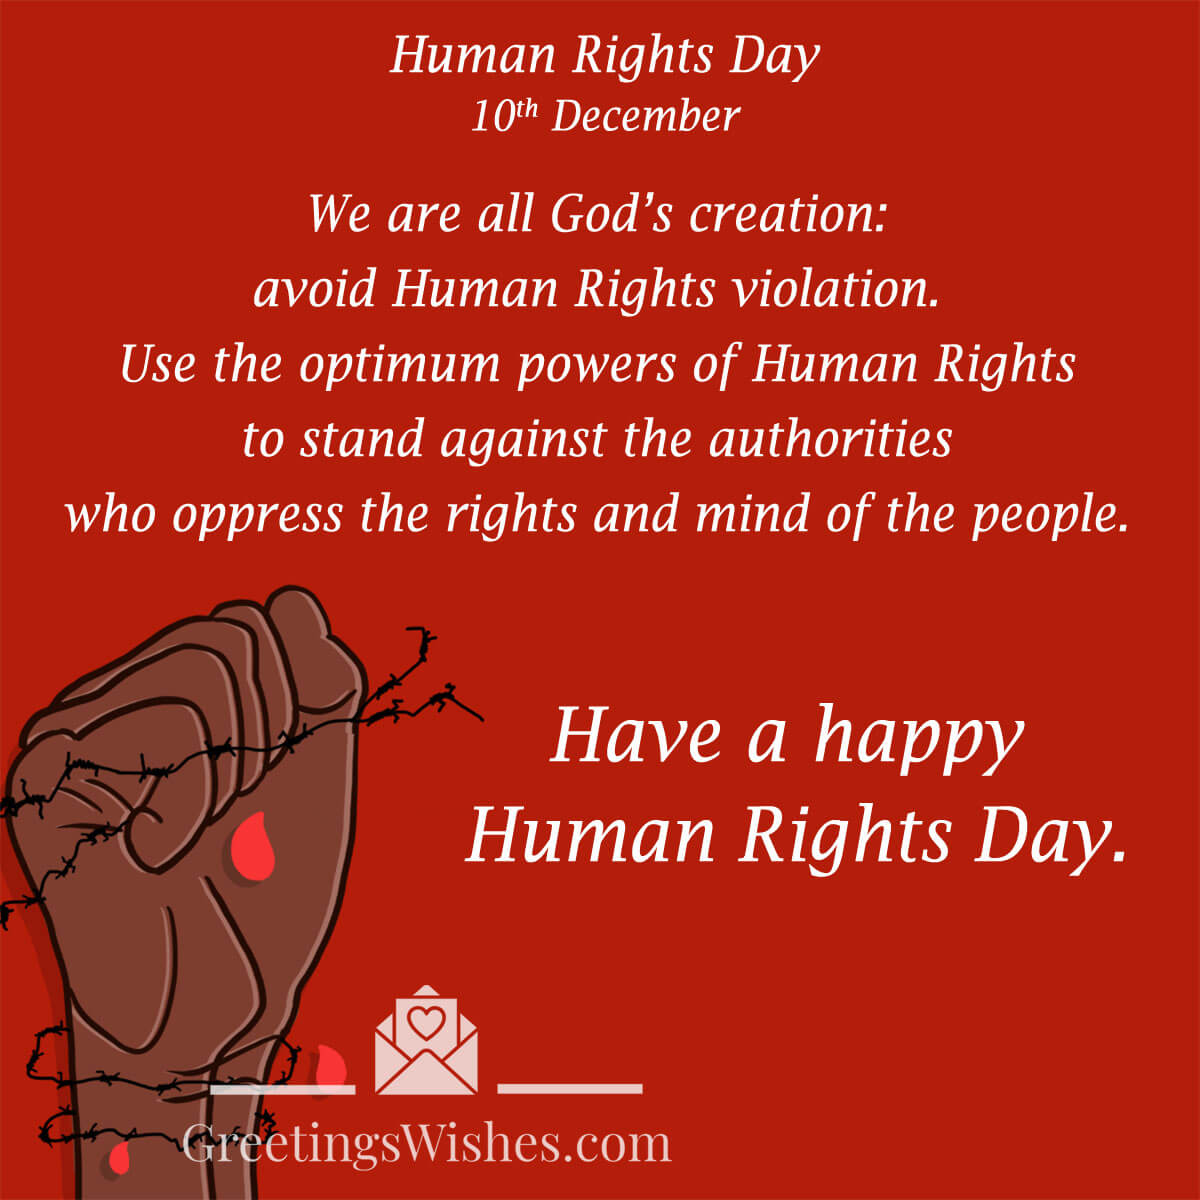 Human Rights Day Greeting